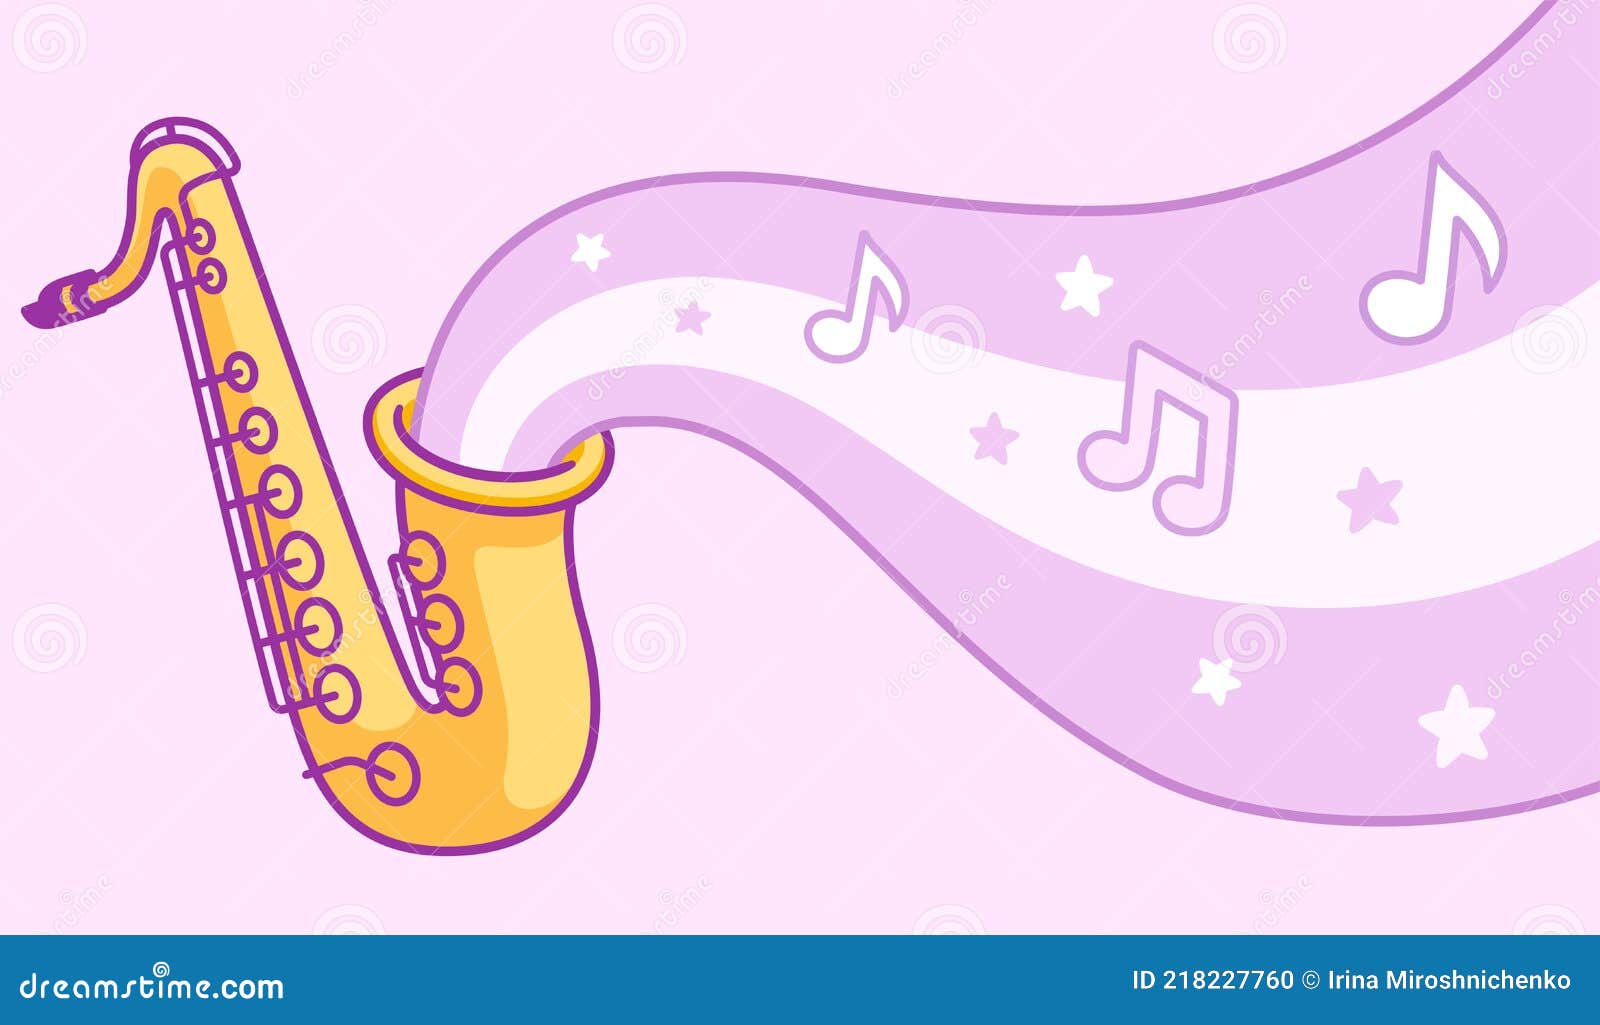 Cartoon saxophone drawing stock vector. Illustration of instrument -  218227760